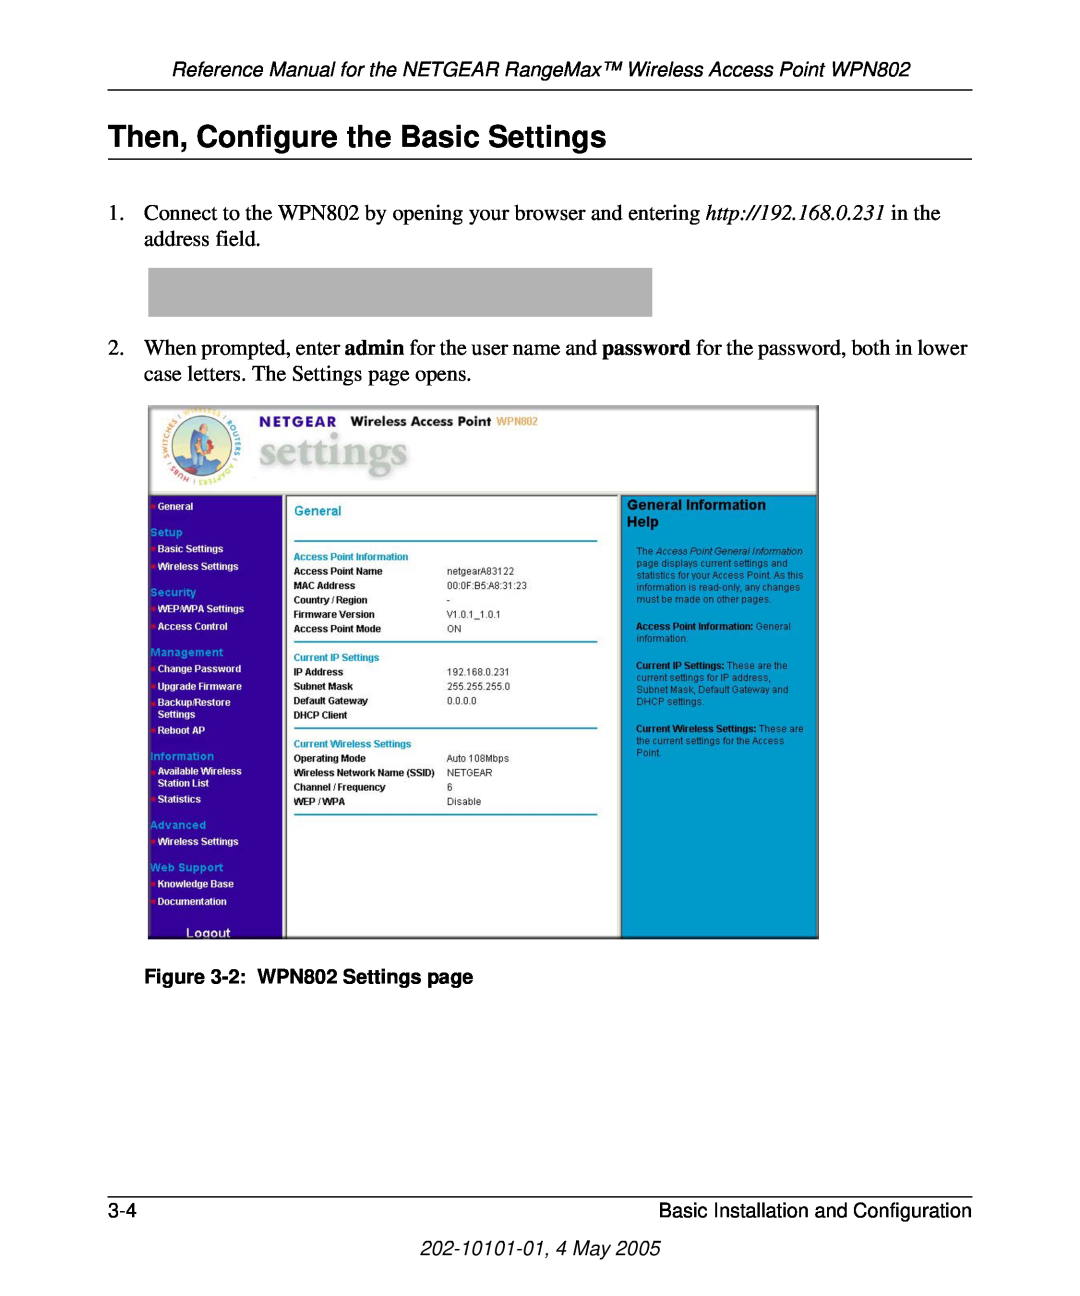 NETGEAR manual Then, Configure the Basic Settings, 2 WPN802 Settings page 